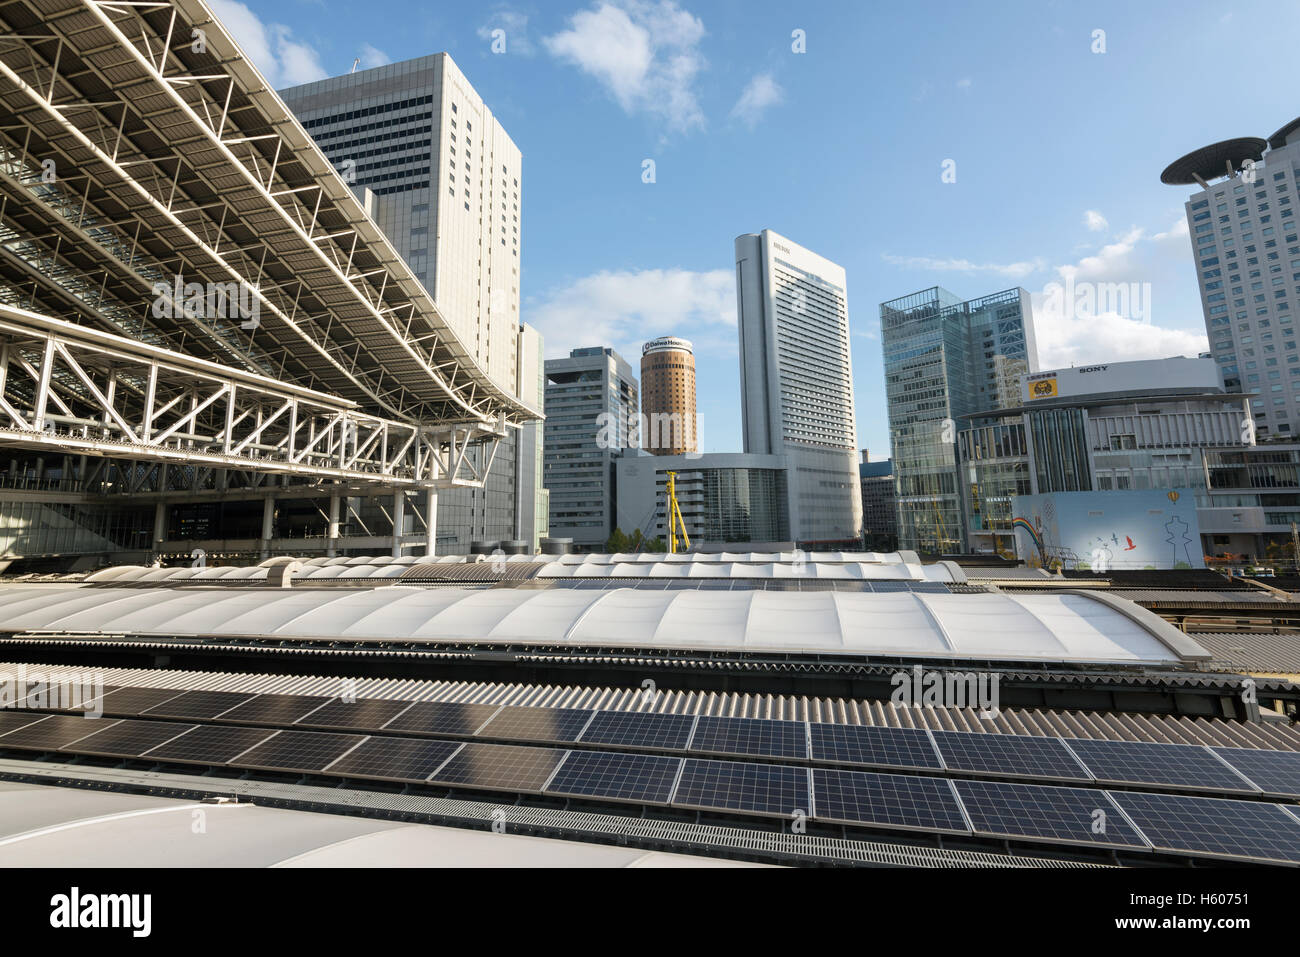 Osaka, Japan - December 1, 2015:Solar power panels at the Osaka Station in Japan. Stock Photo